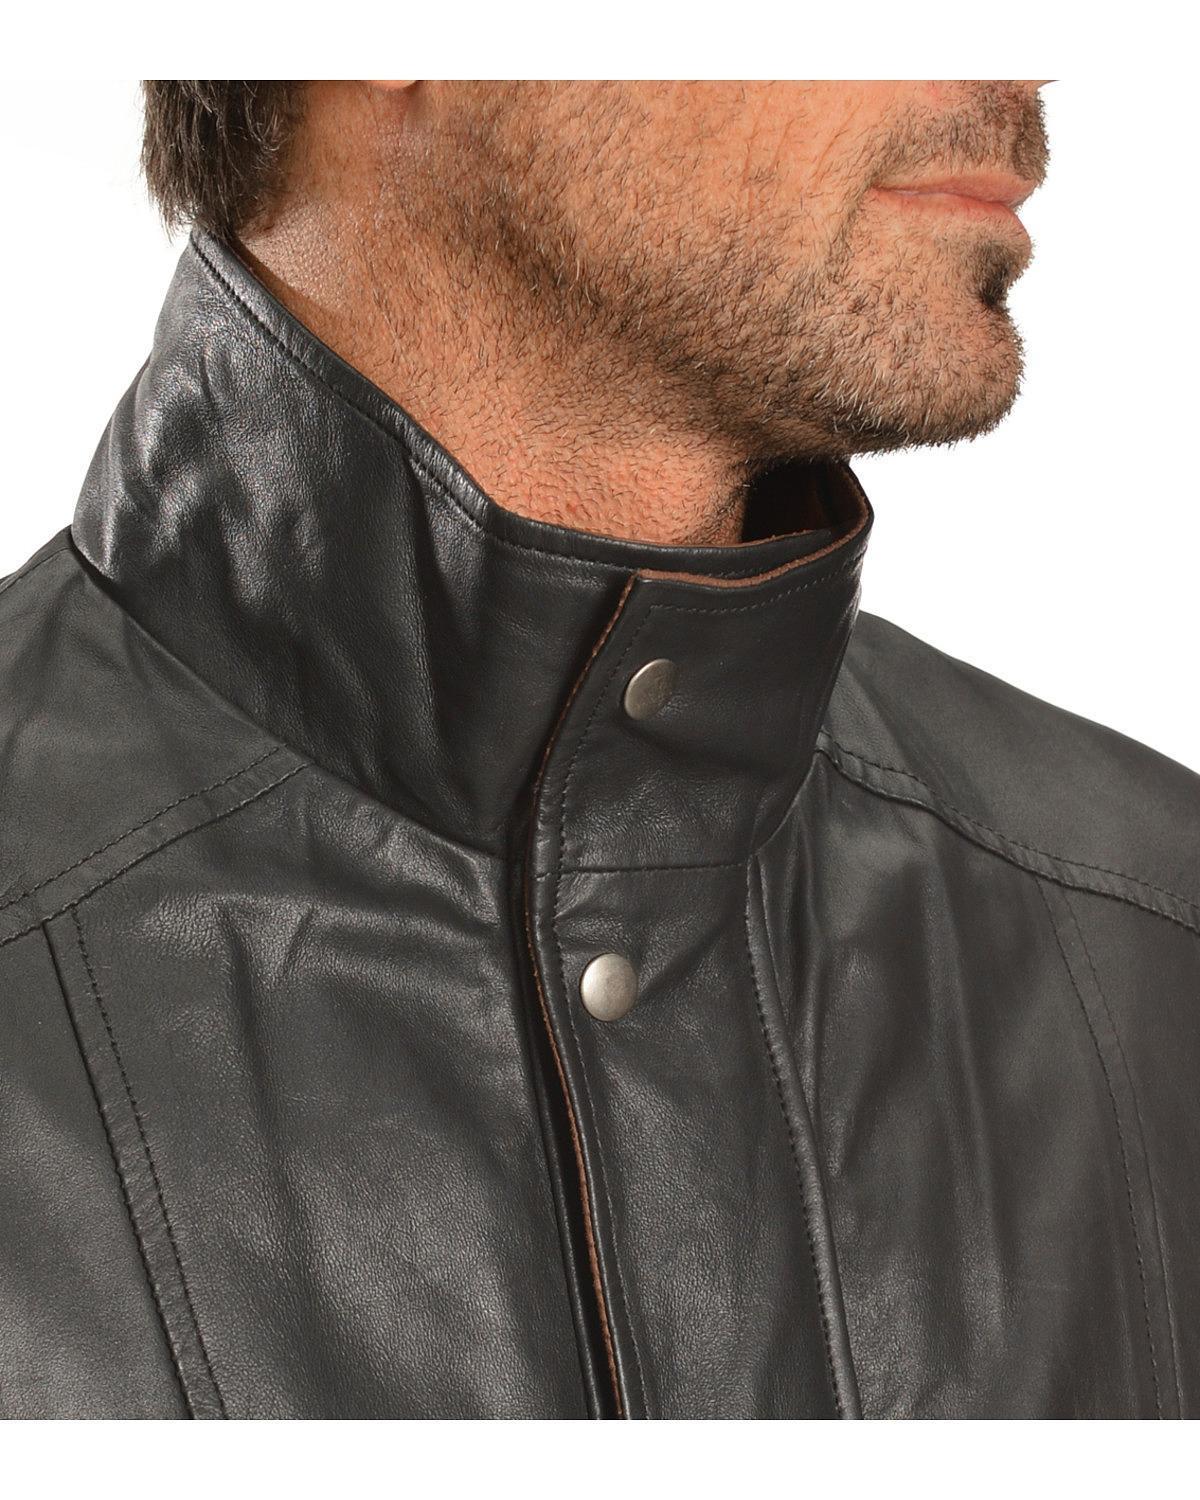 Men's Double Collar Leather Jacket